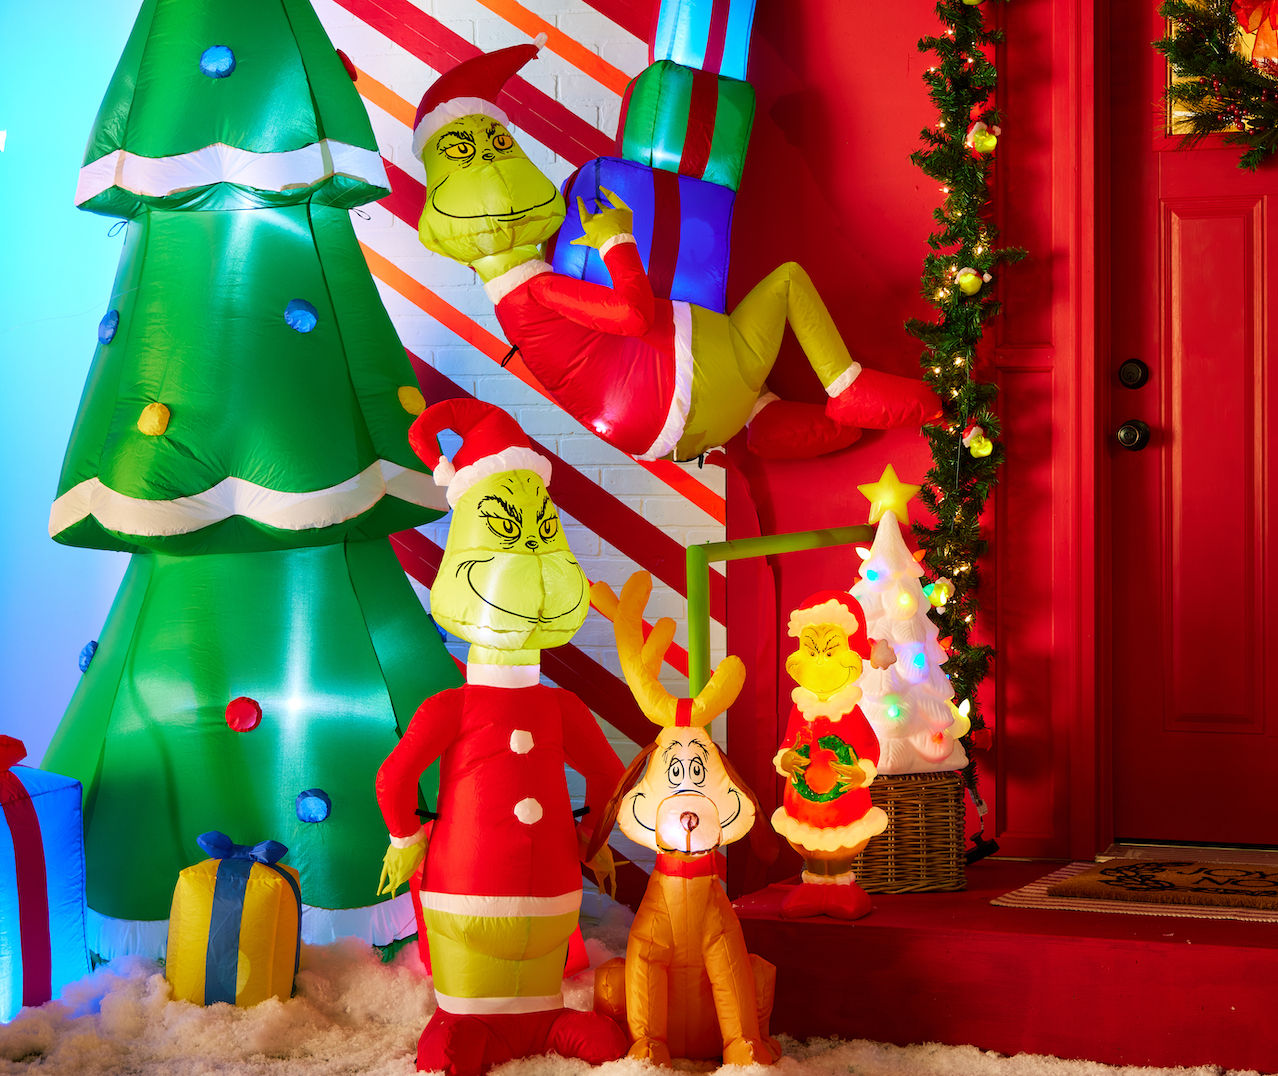 Dr. Seuss' How The Grinch Stole Christmas!